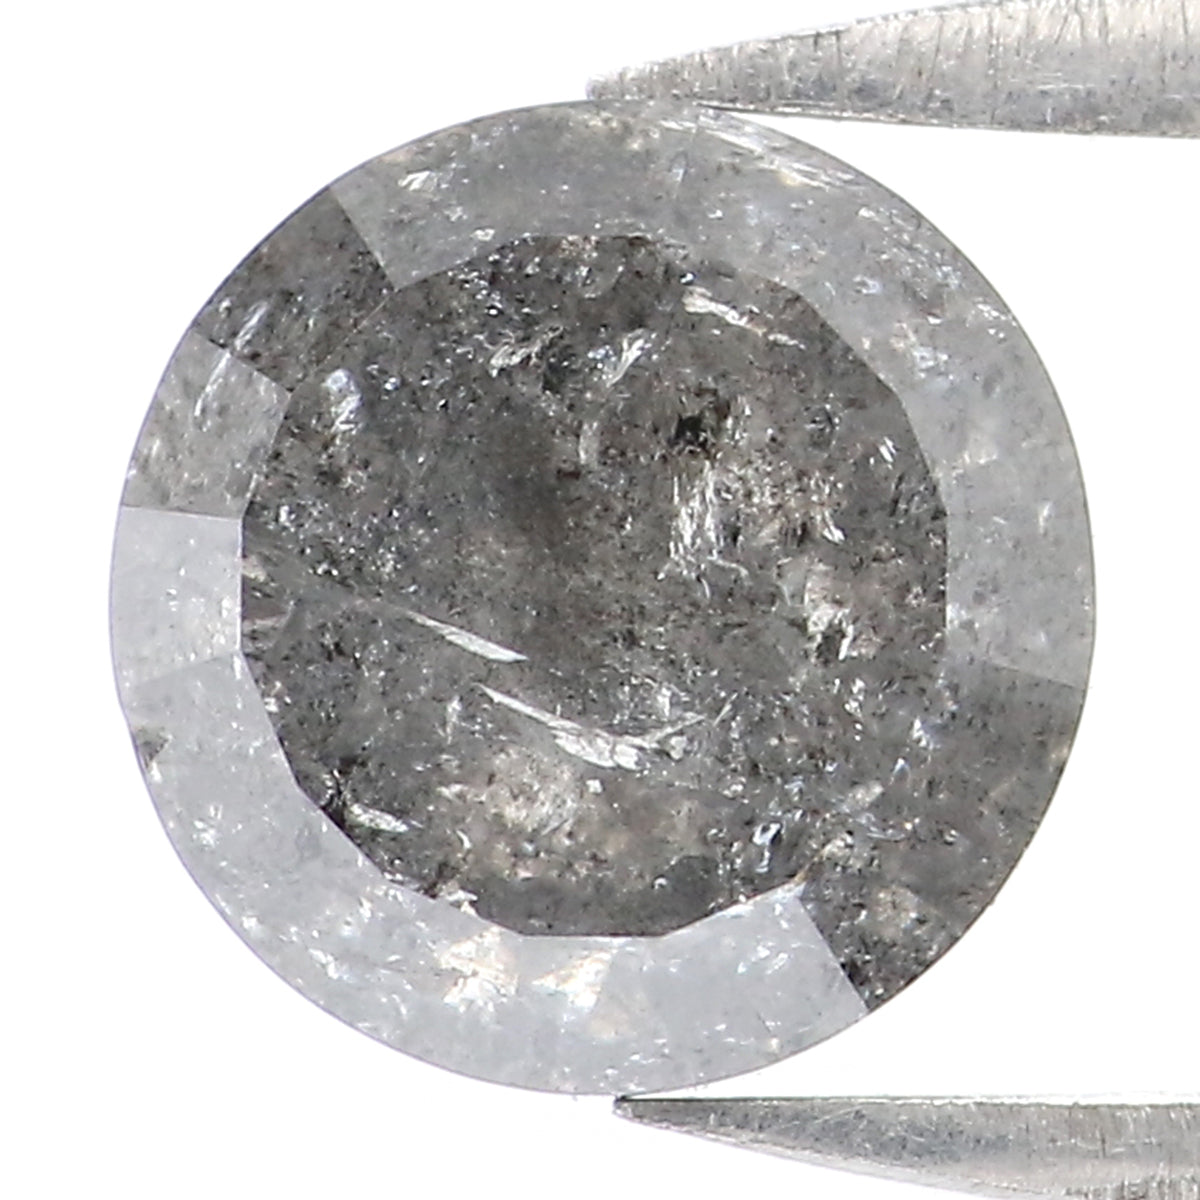 1.54 CT Natural Loose Round Rose Cut Diamond Salt And Pepper Round Shape Diamond 6.75 MM Natural Loose Diamond Round Rose Cut Diamond QL1917